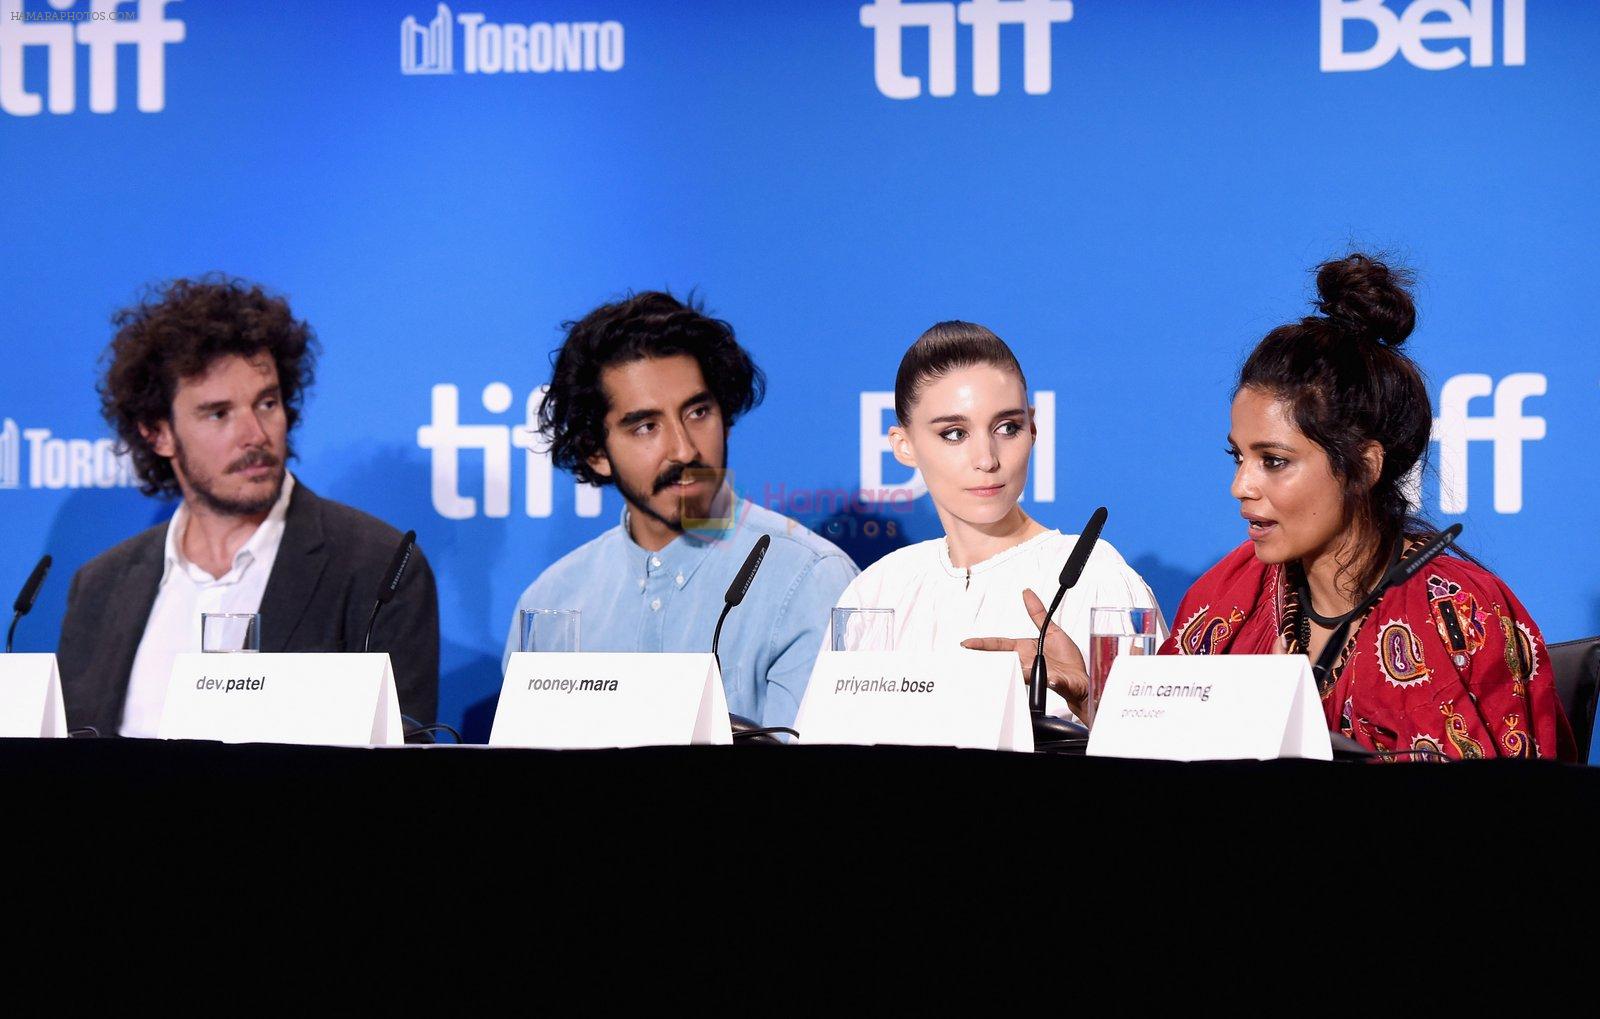 Priyanka Bose, Dev Patel at Toronto Film Festival